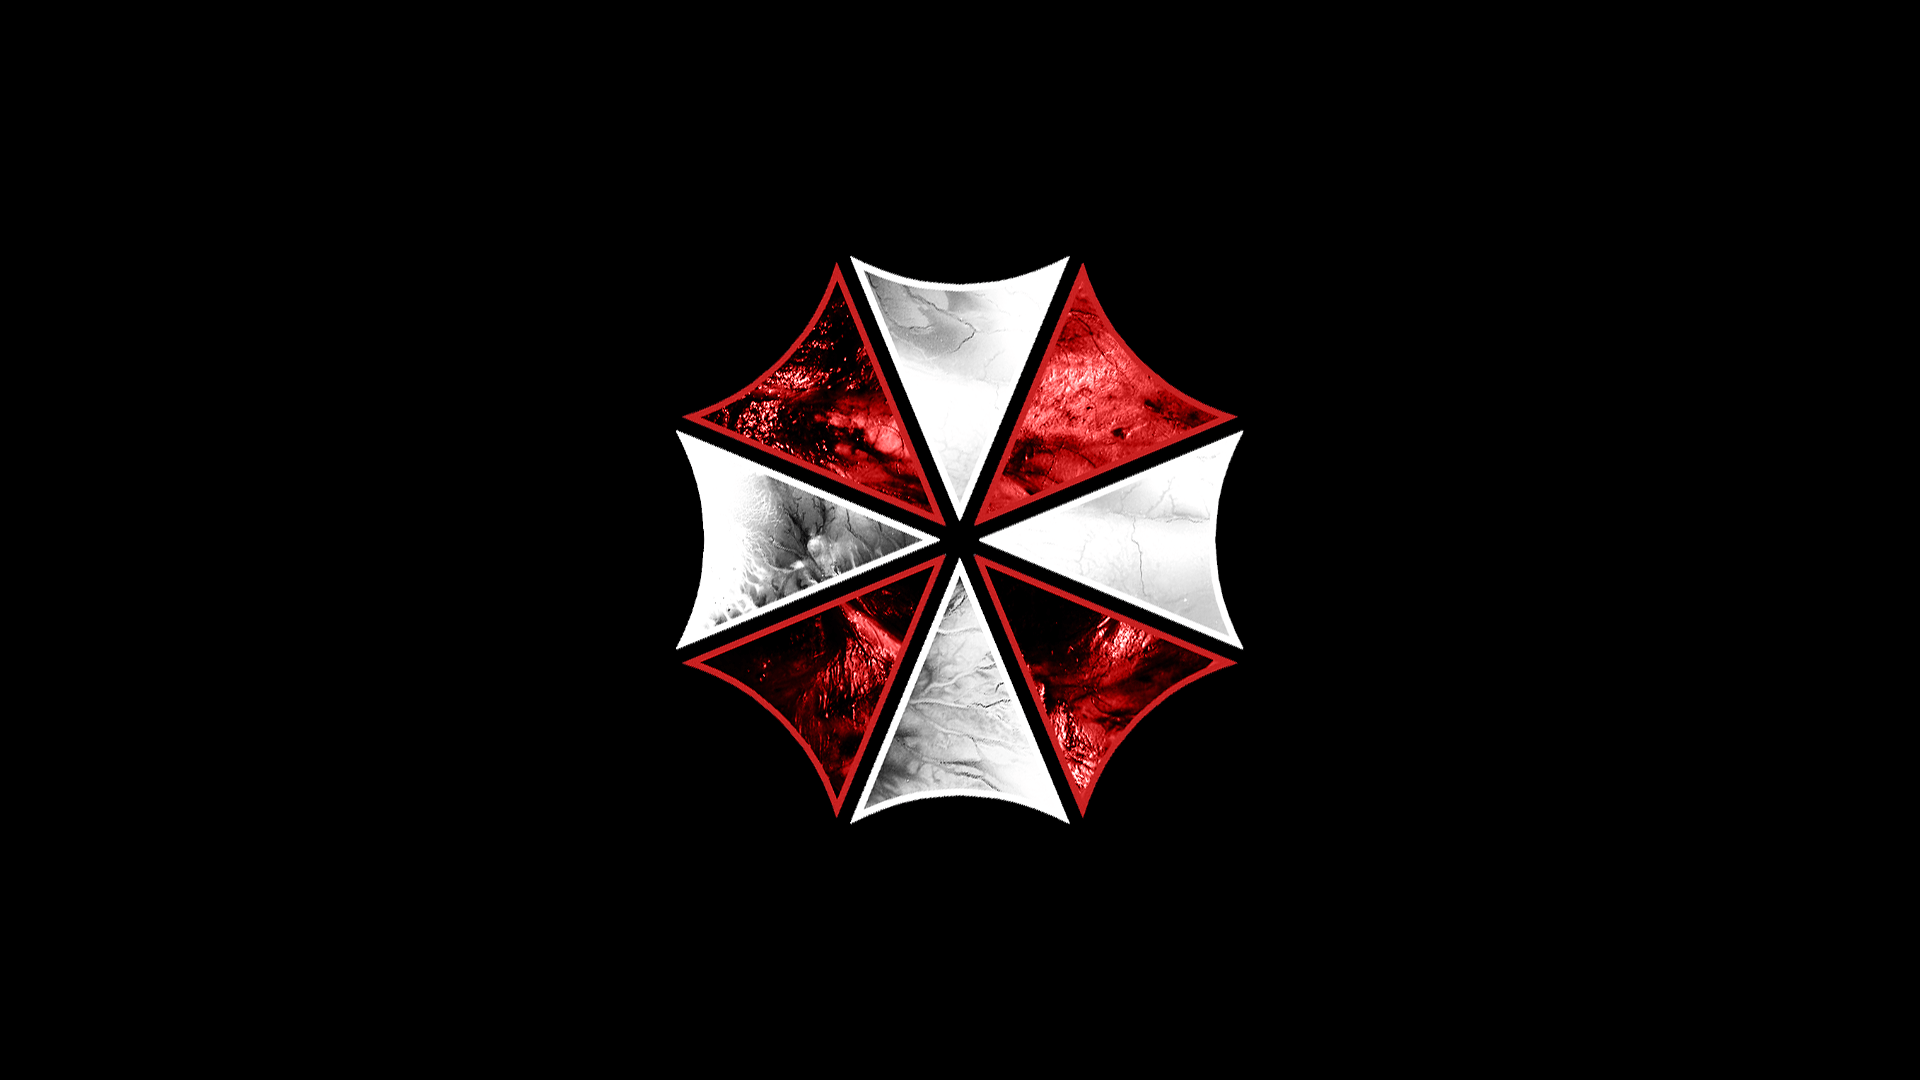 Umbrella Corp Logo - 1920x1080 video games, movies, Resident Evil, Umbrella Corp., logos ...